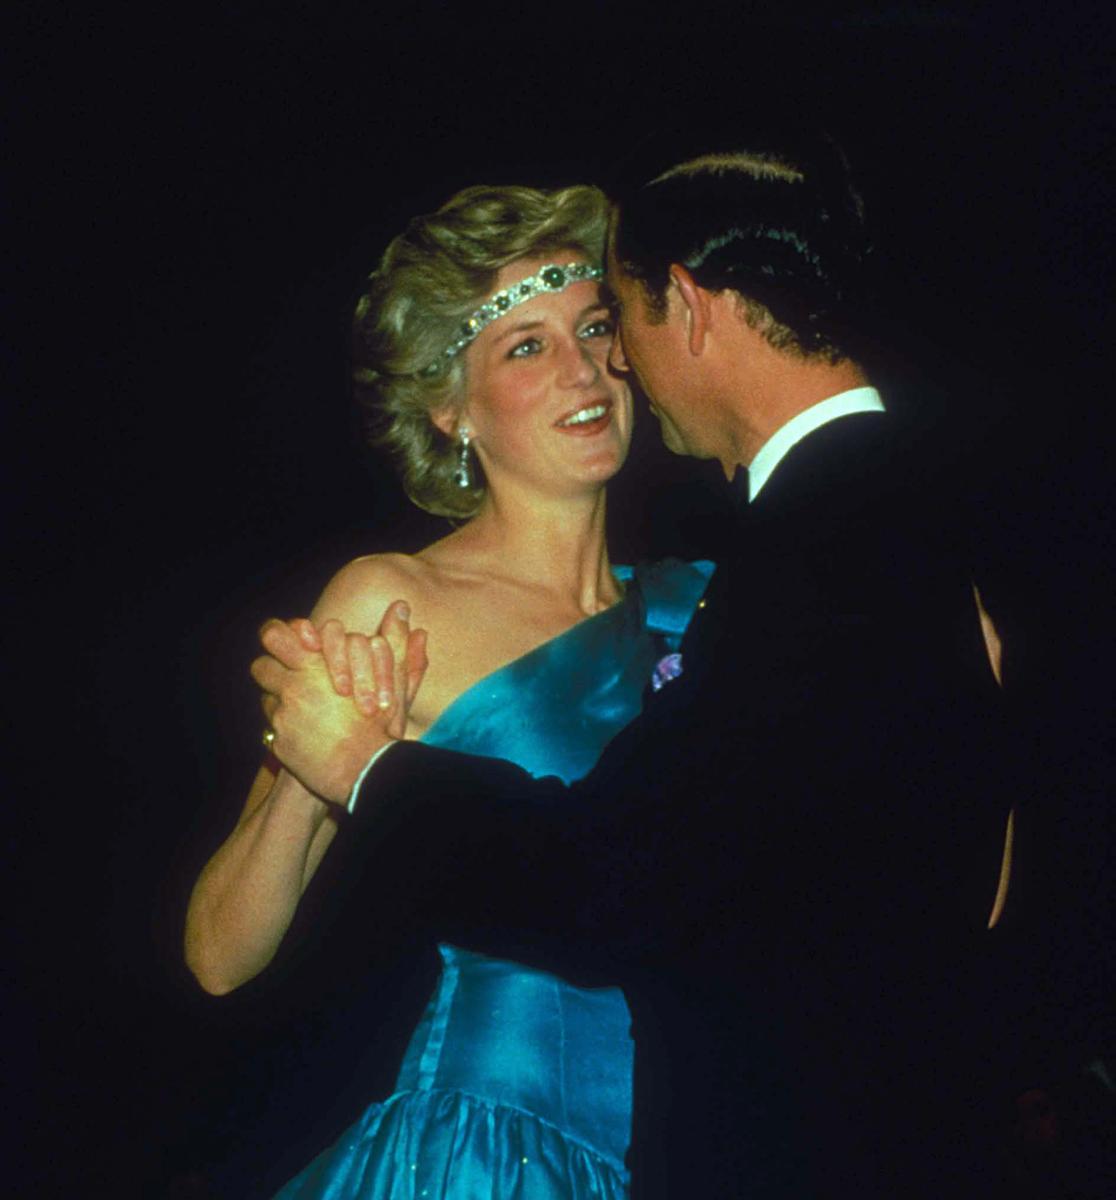 The 5 Times Princess Diana's Fashion Sense Caused a Royal Scandal - image 4